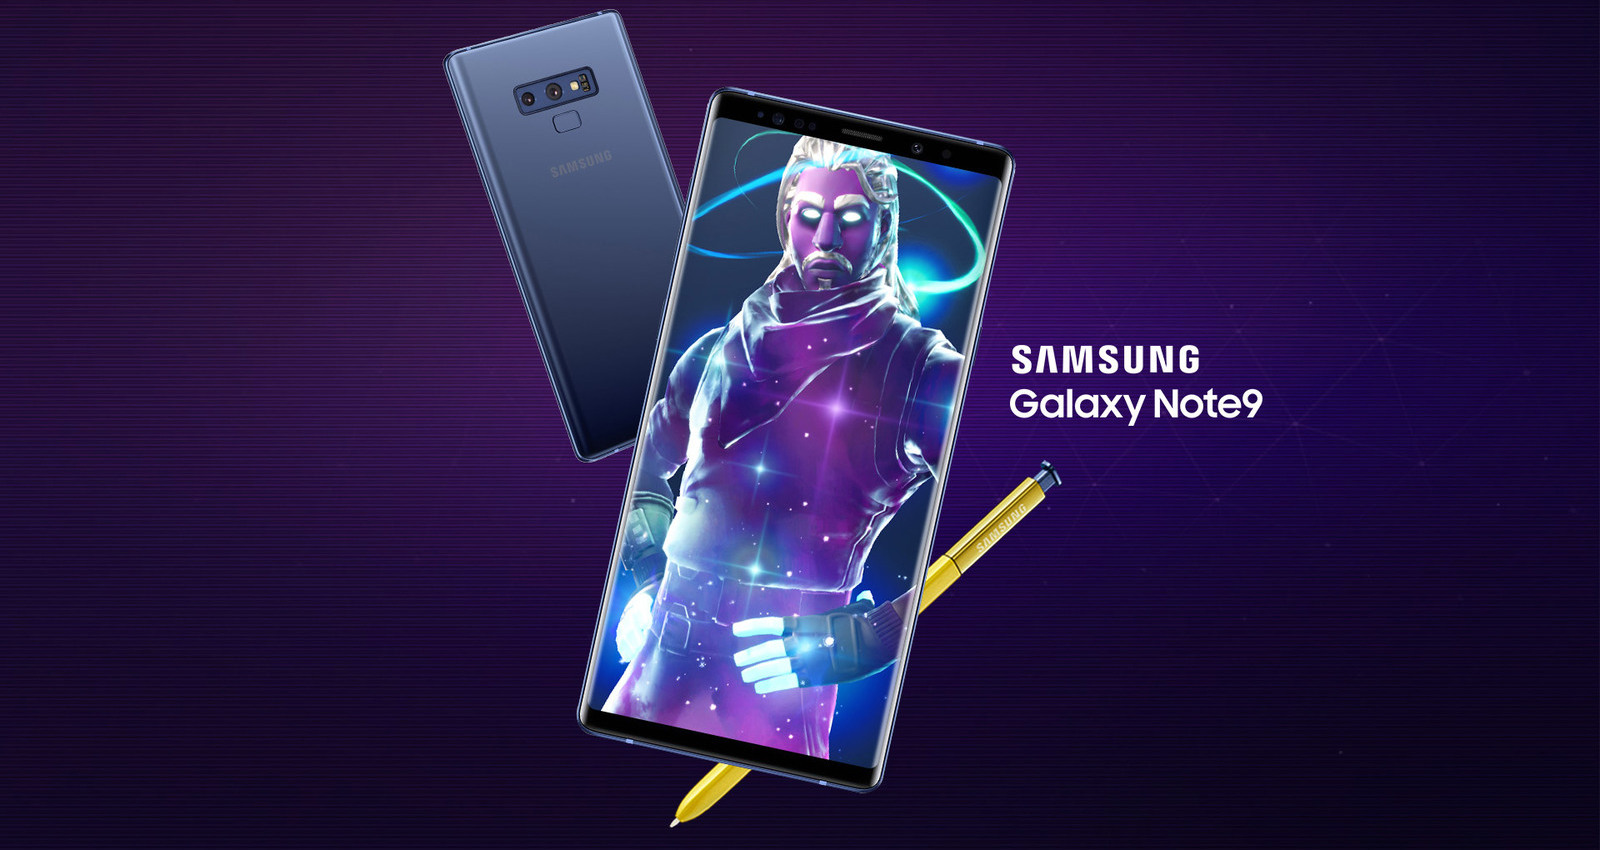 Samsung x Fortnite: The Galaxy Skin